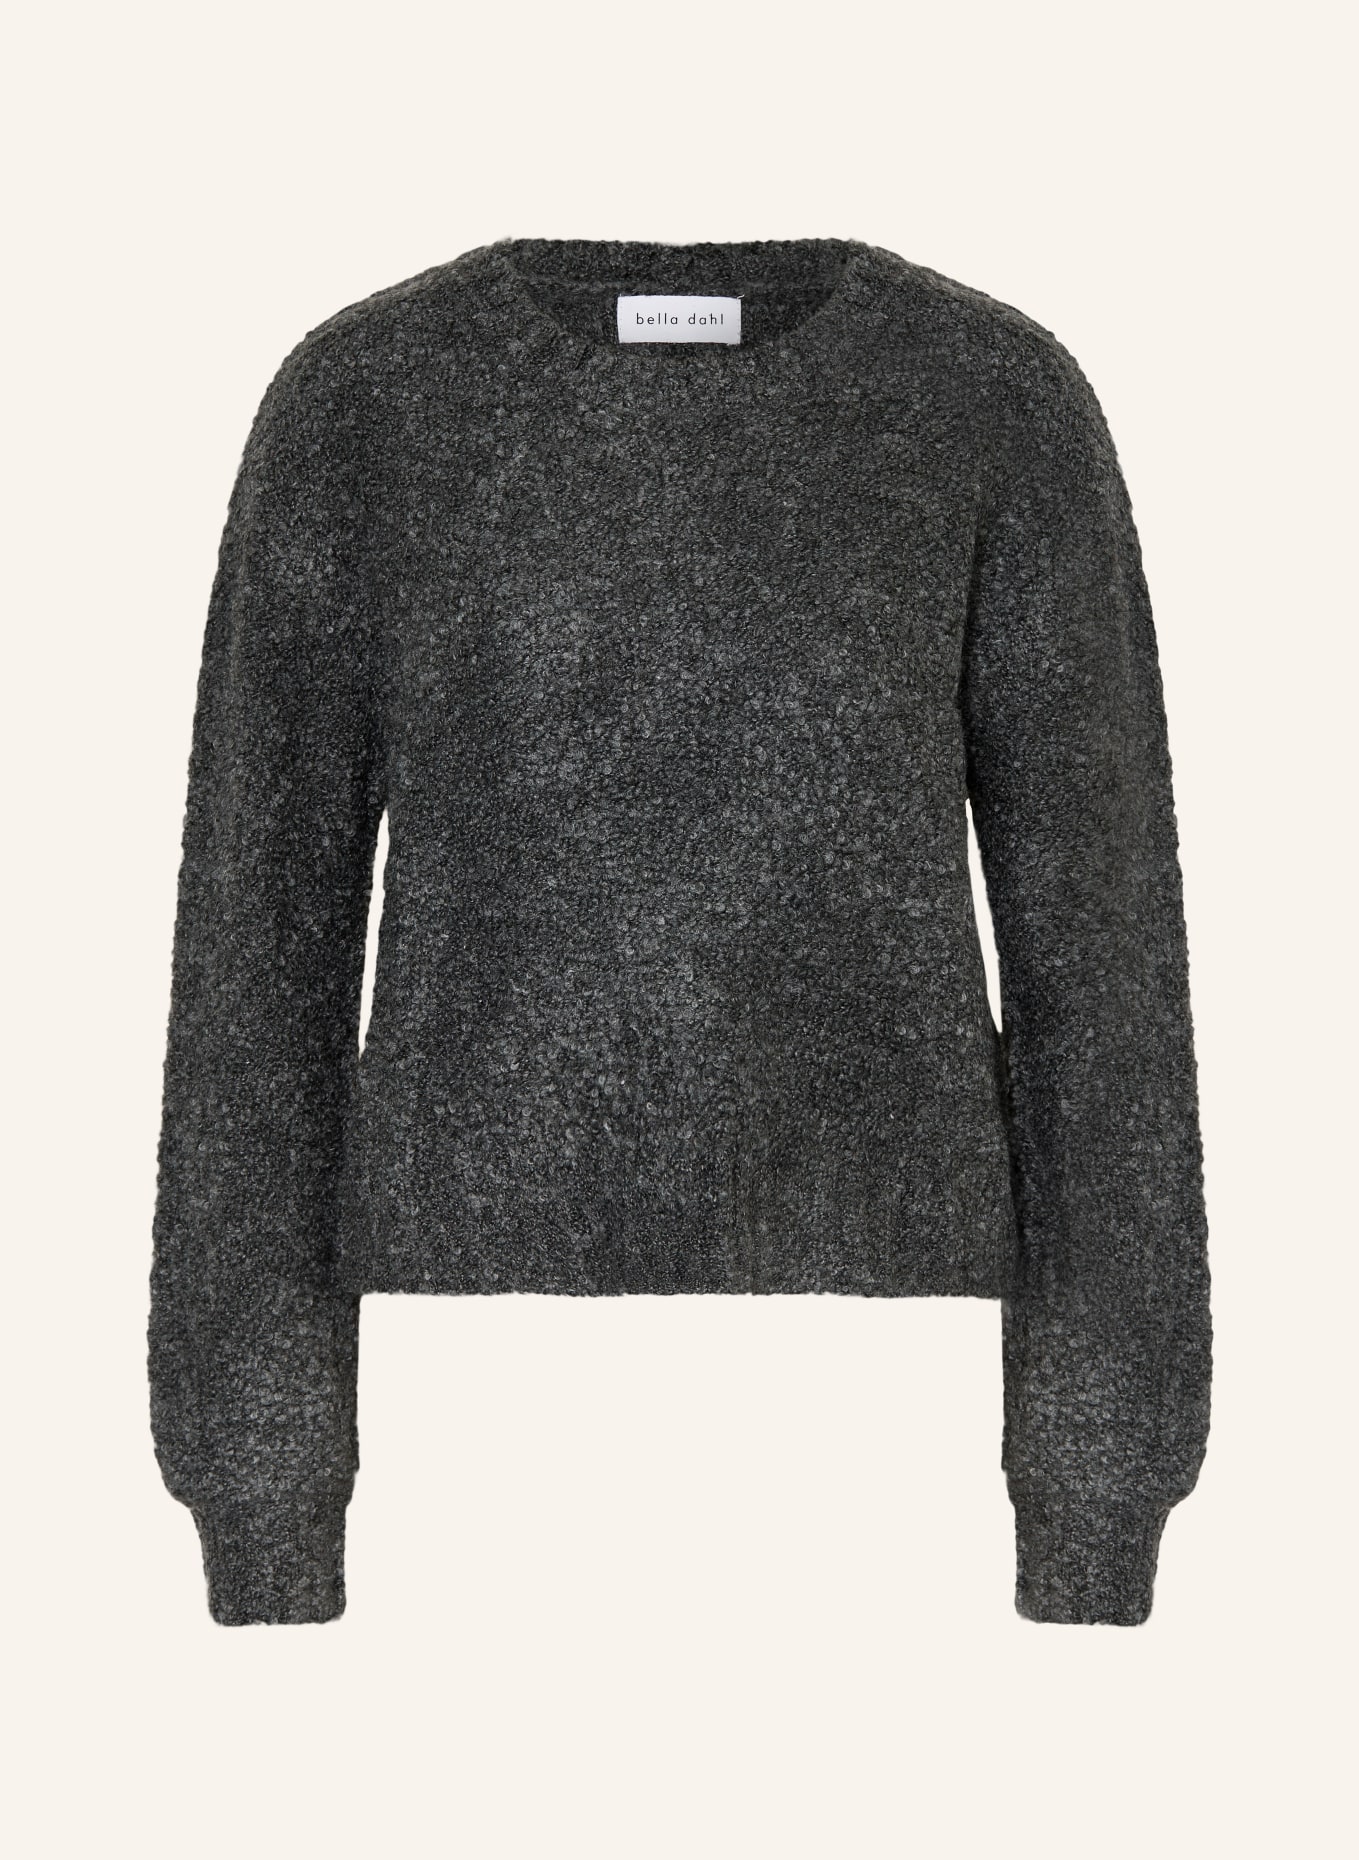 bella dahl Sweater, Color: GRAY (Image 1)